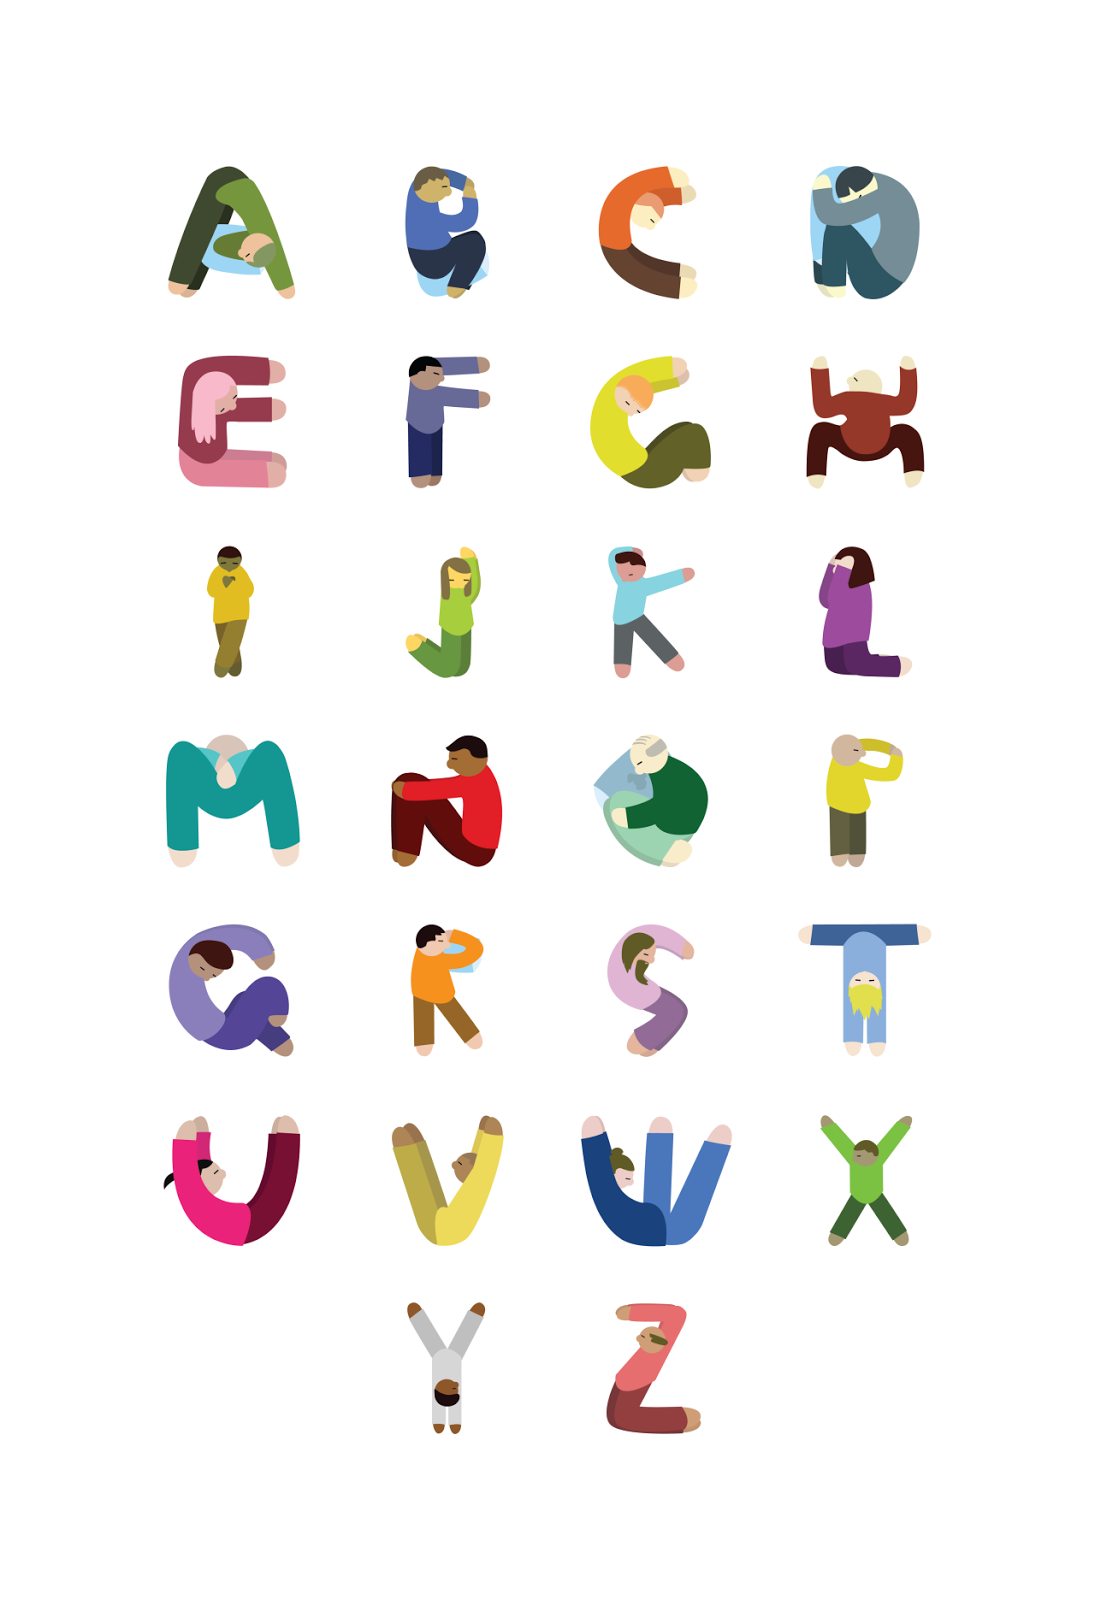 Junior Typography Studio: The Illustrative Alphabet